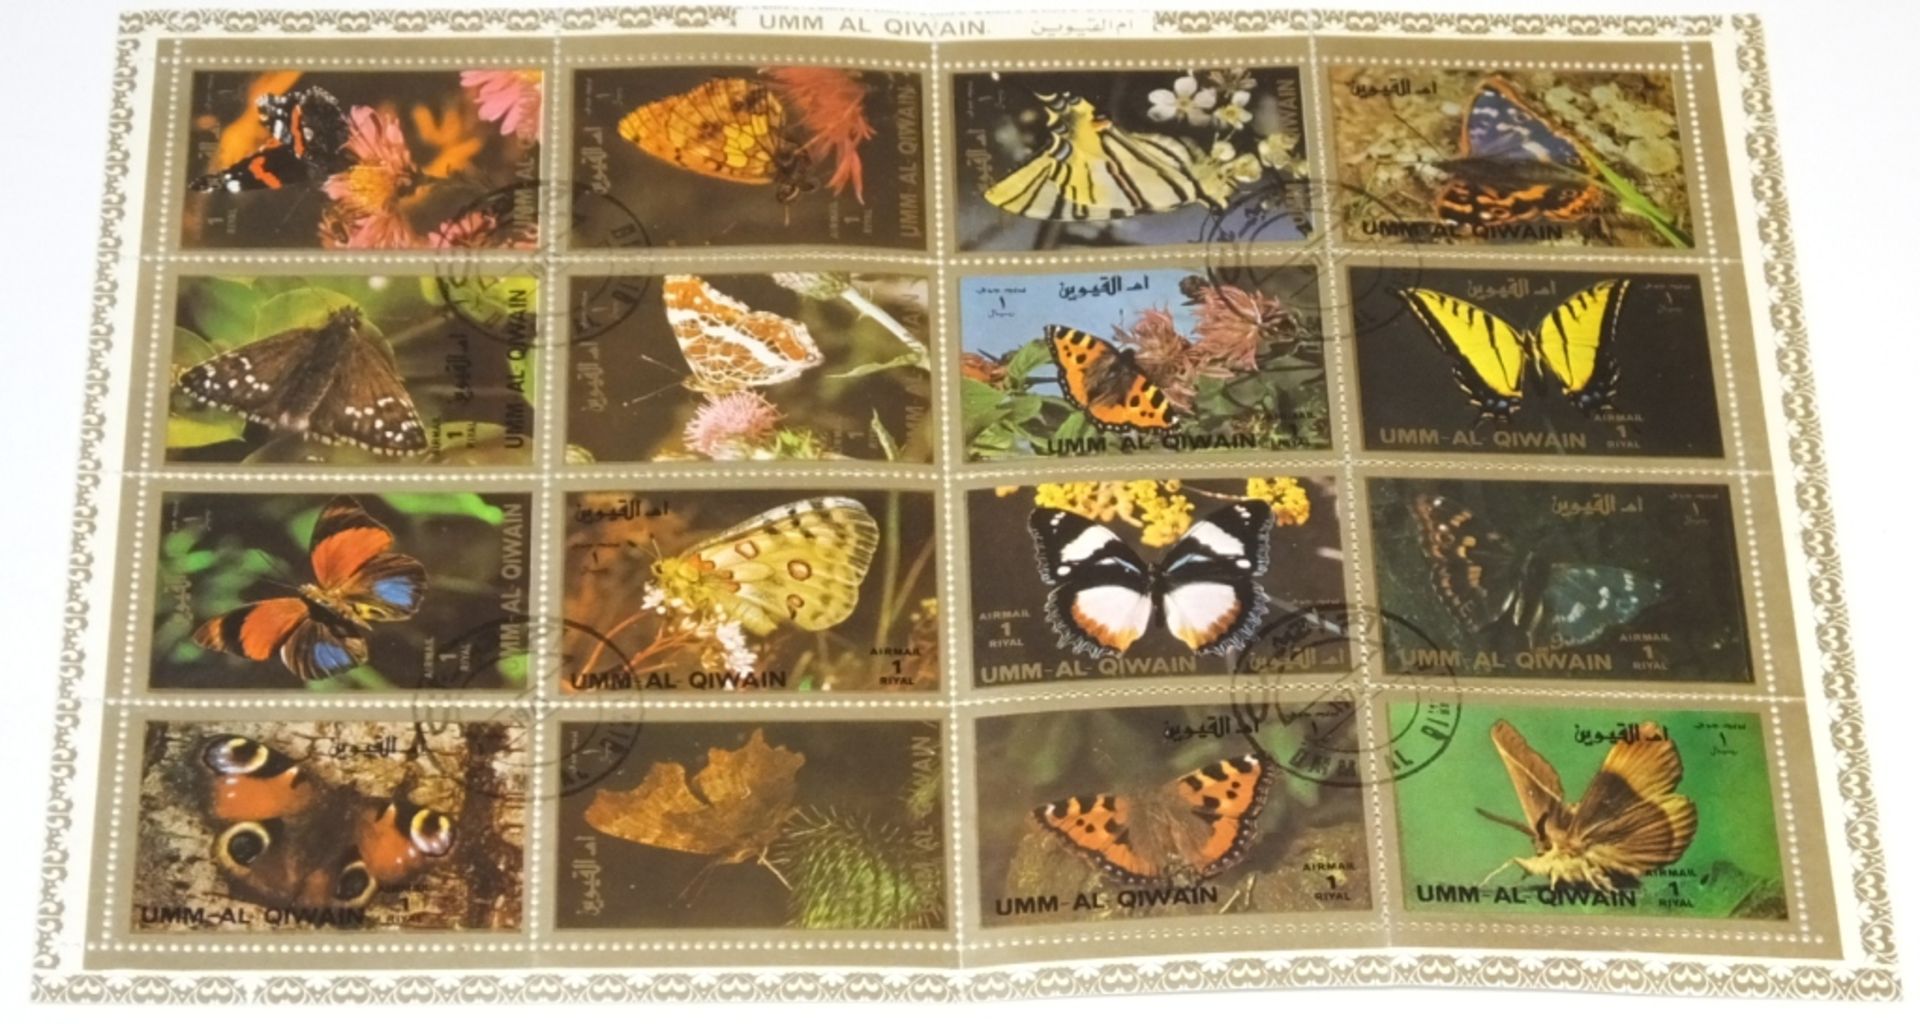 Stamp Card Sets - Jersey, Guernsey, British Gardens, Christmas, British Cars, British RIve - Image 20 of 22